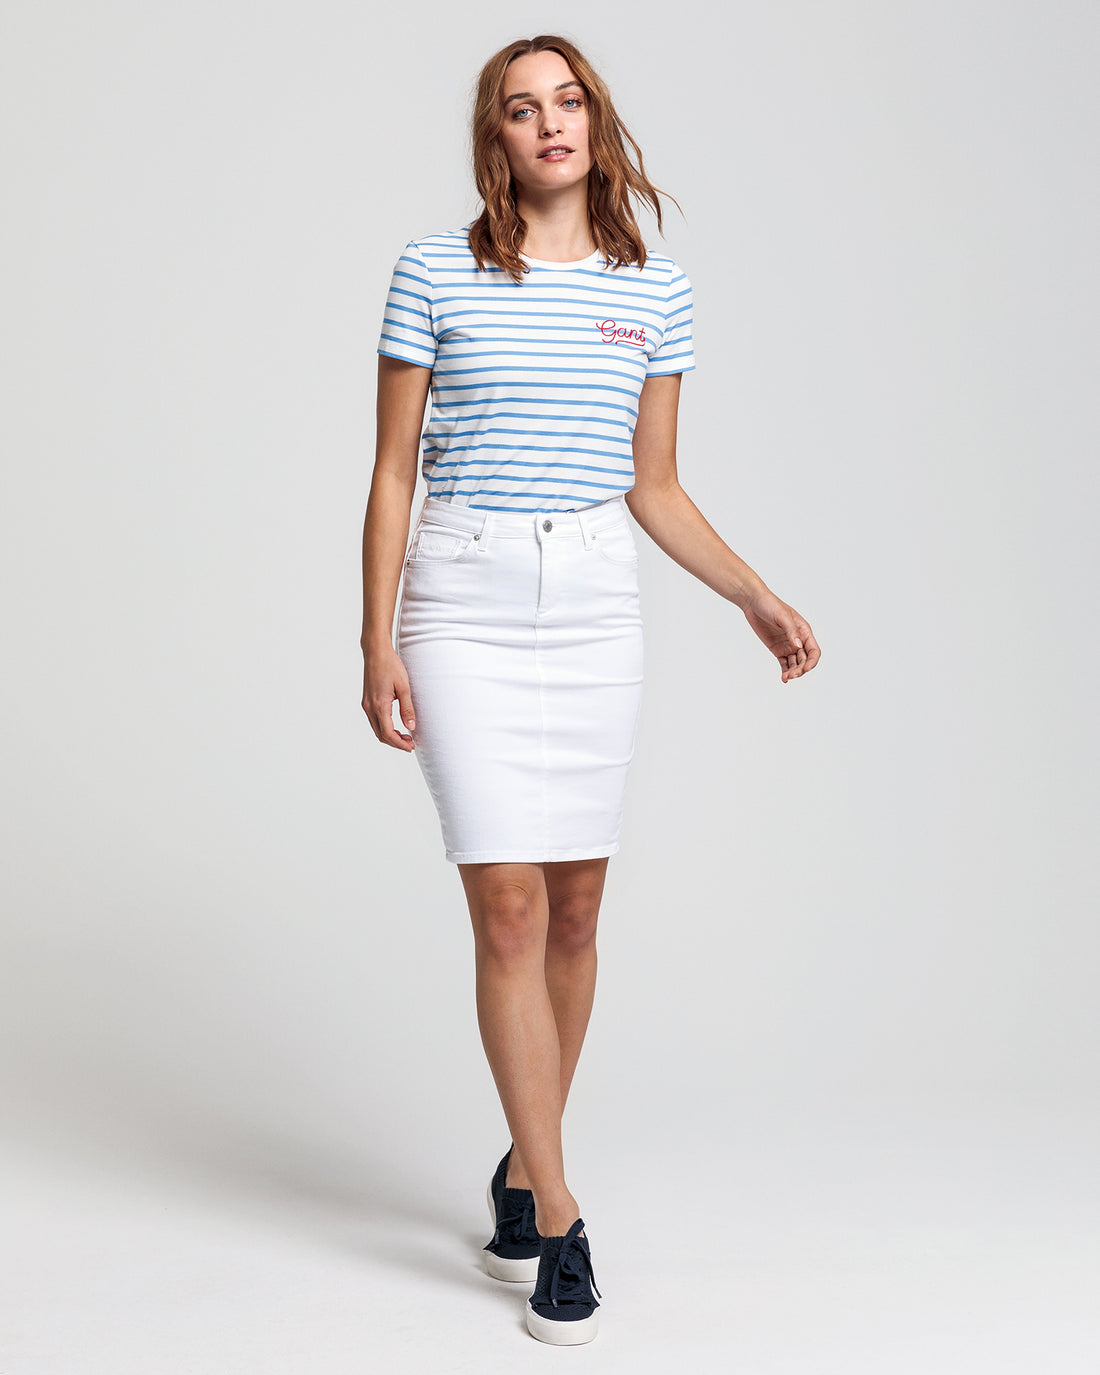 Breton Stripe T-Shirt - Pacific Blue